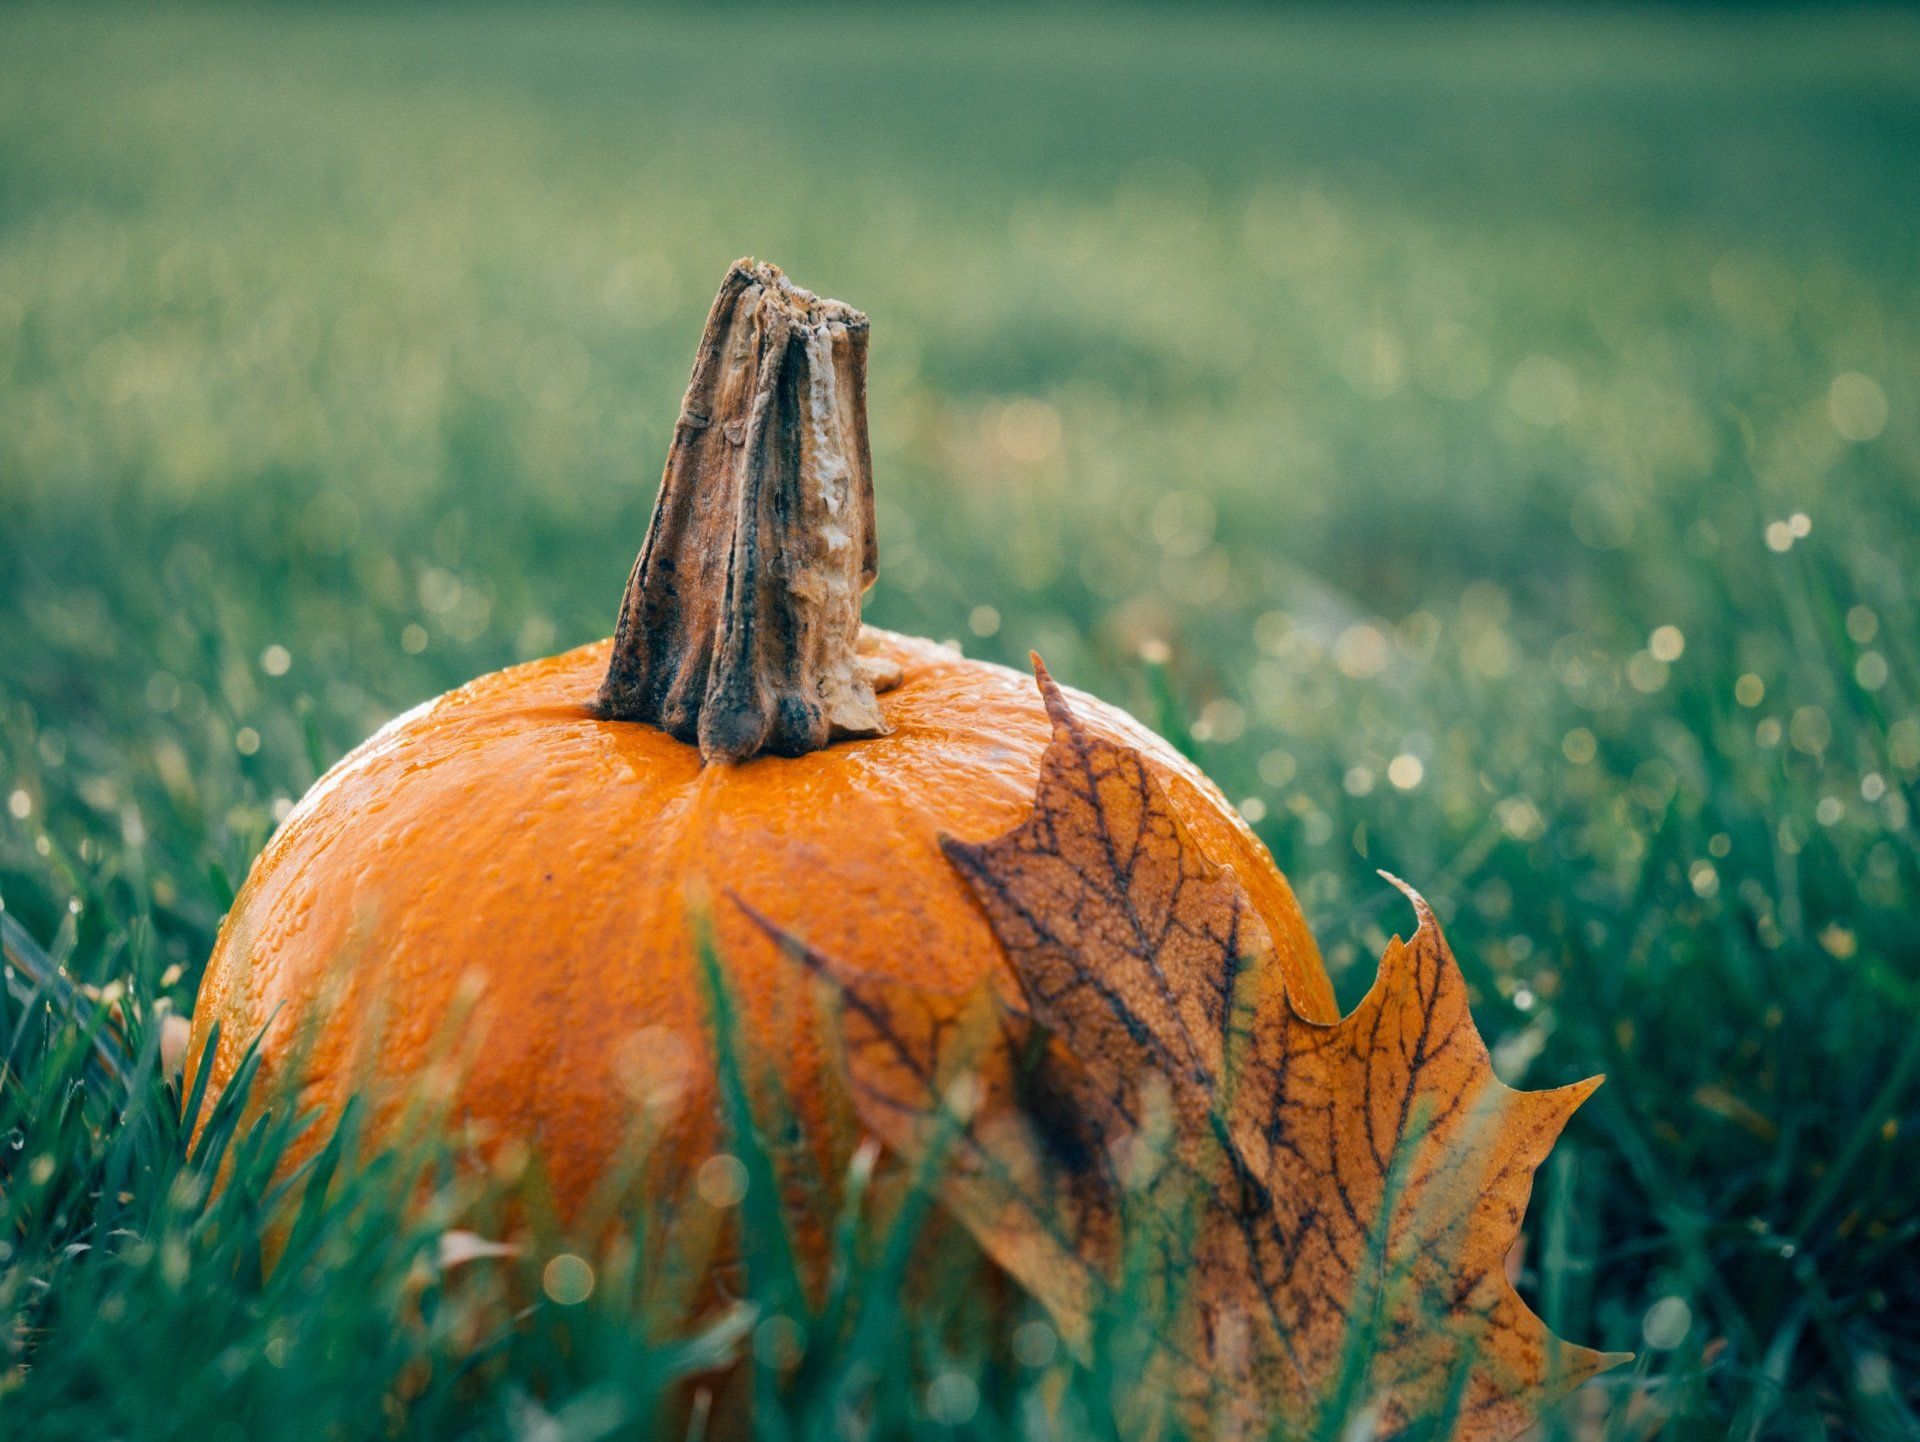 pumpkin in grass field